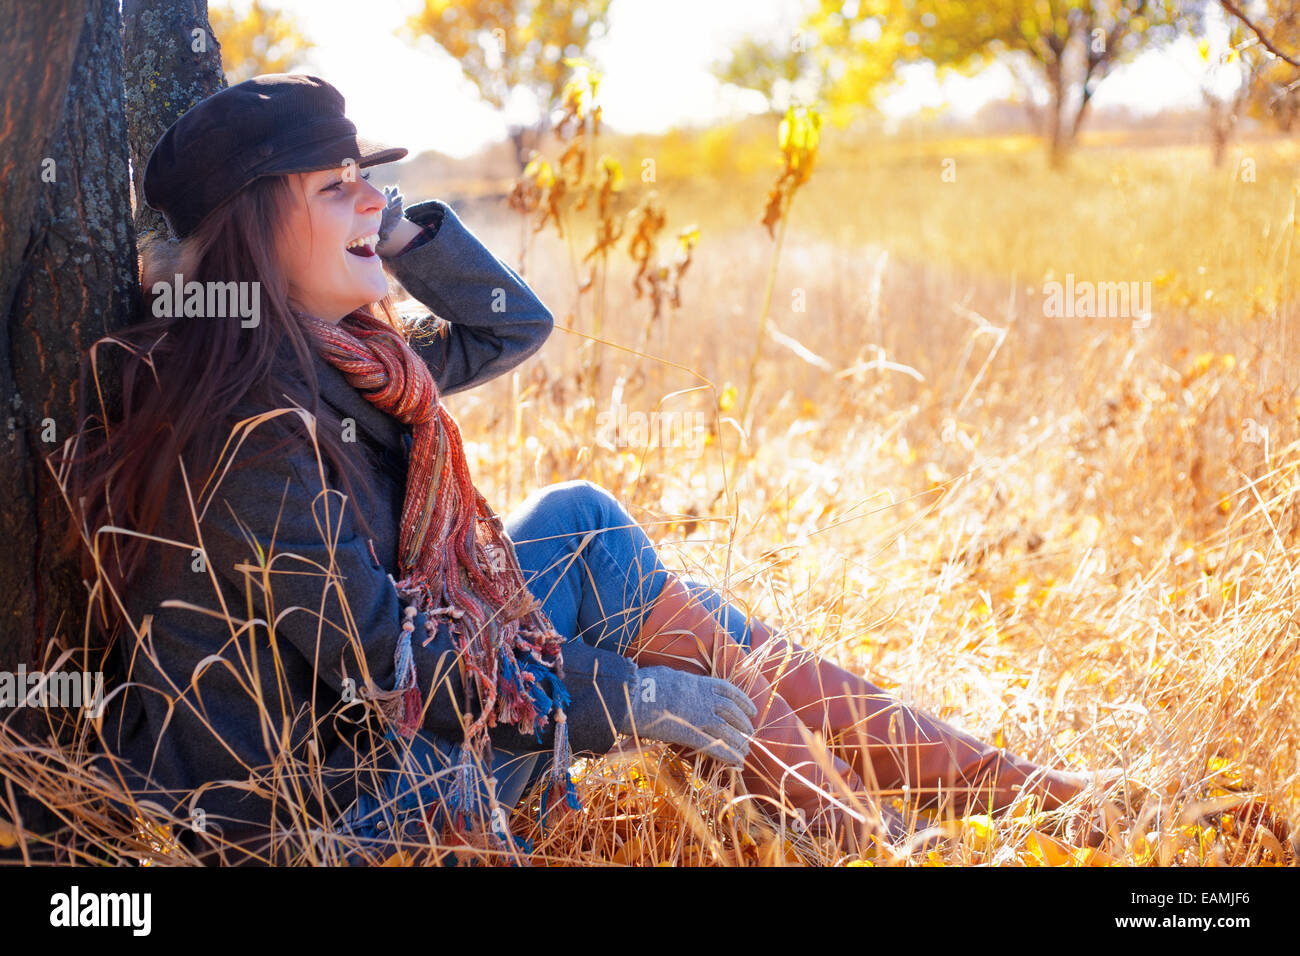 Girl sitting near a tree in autumn Stock Photo